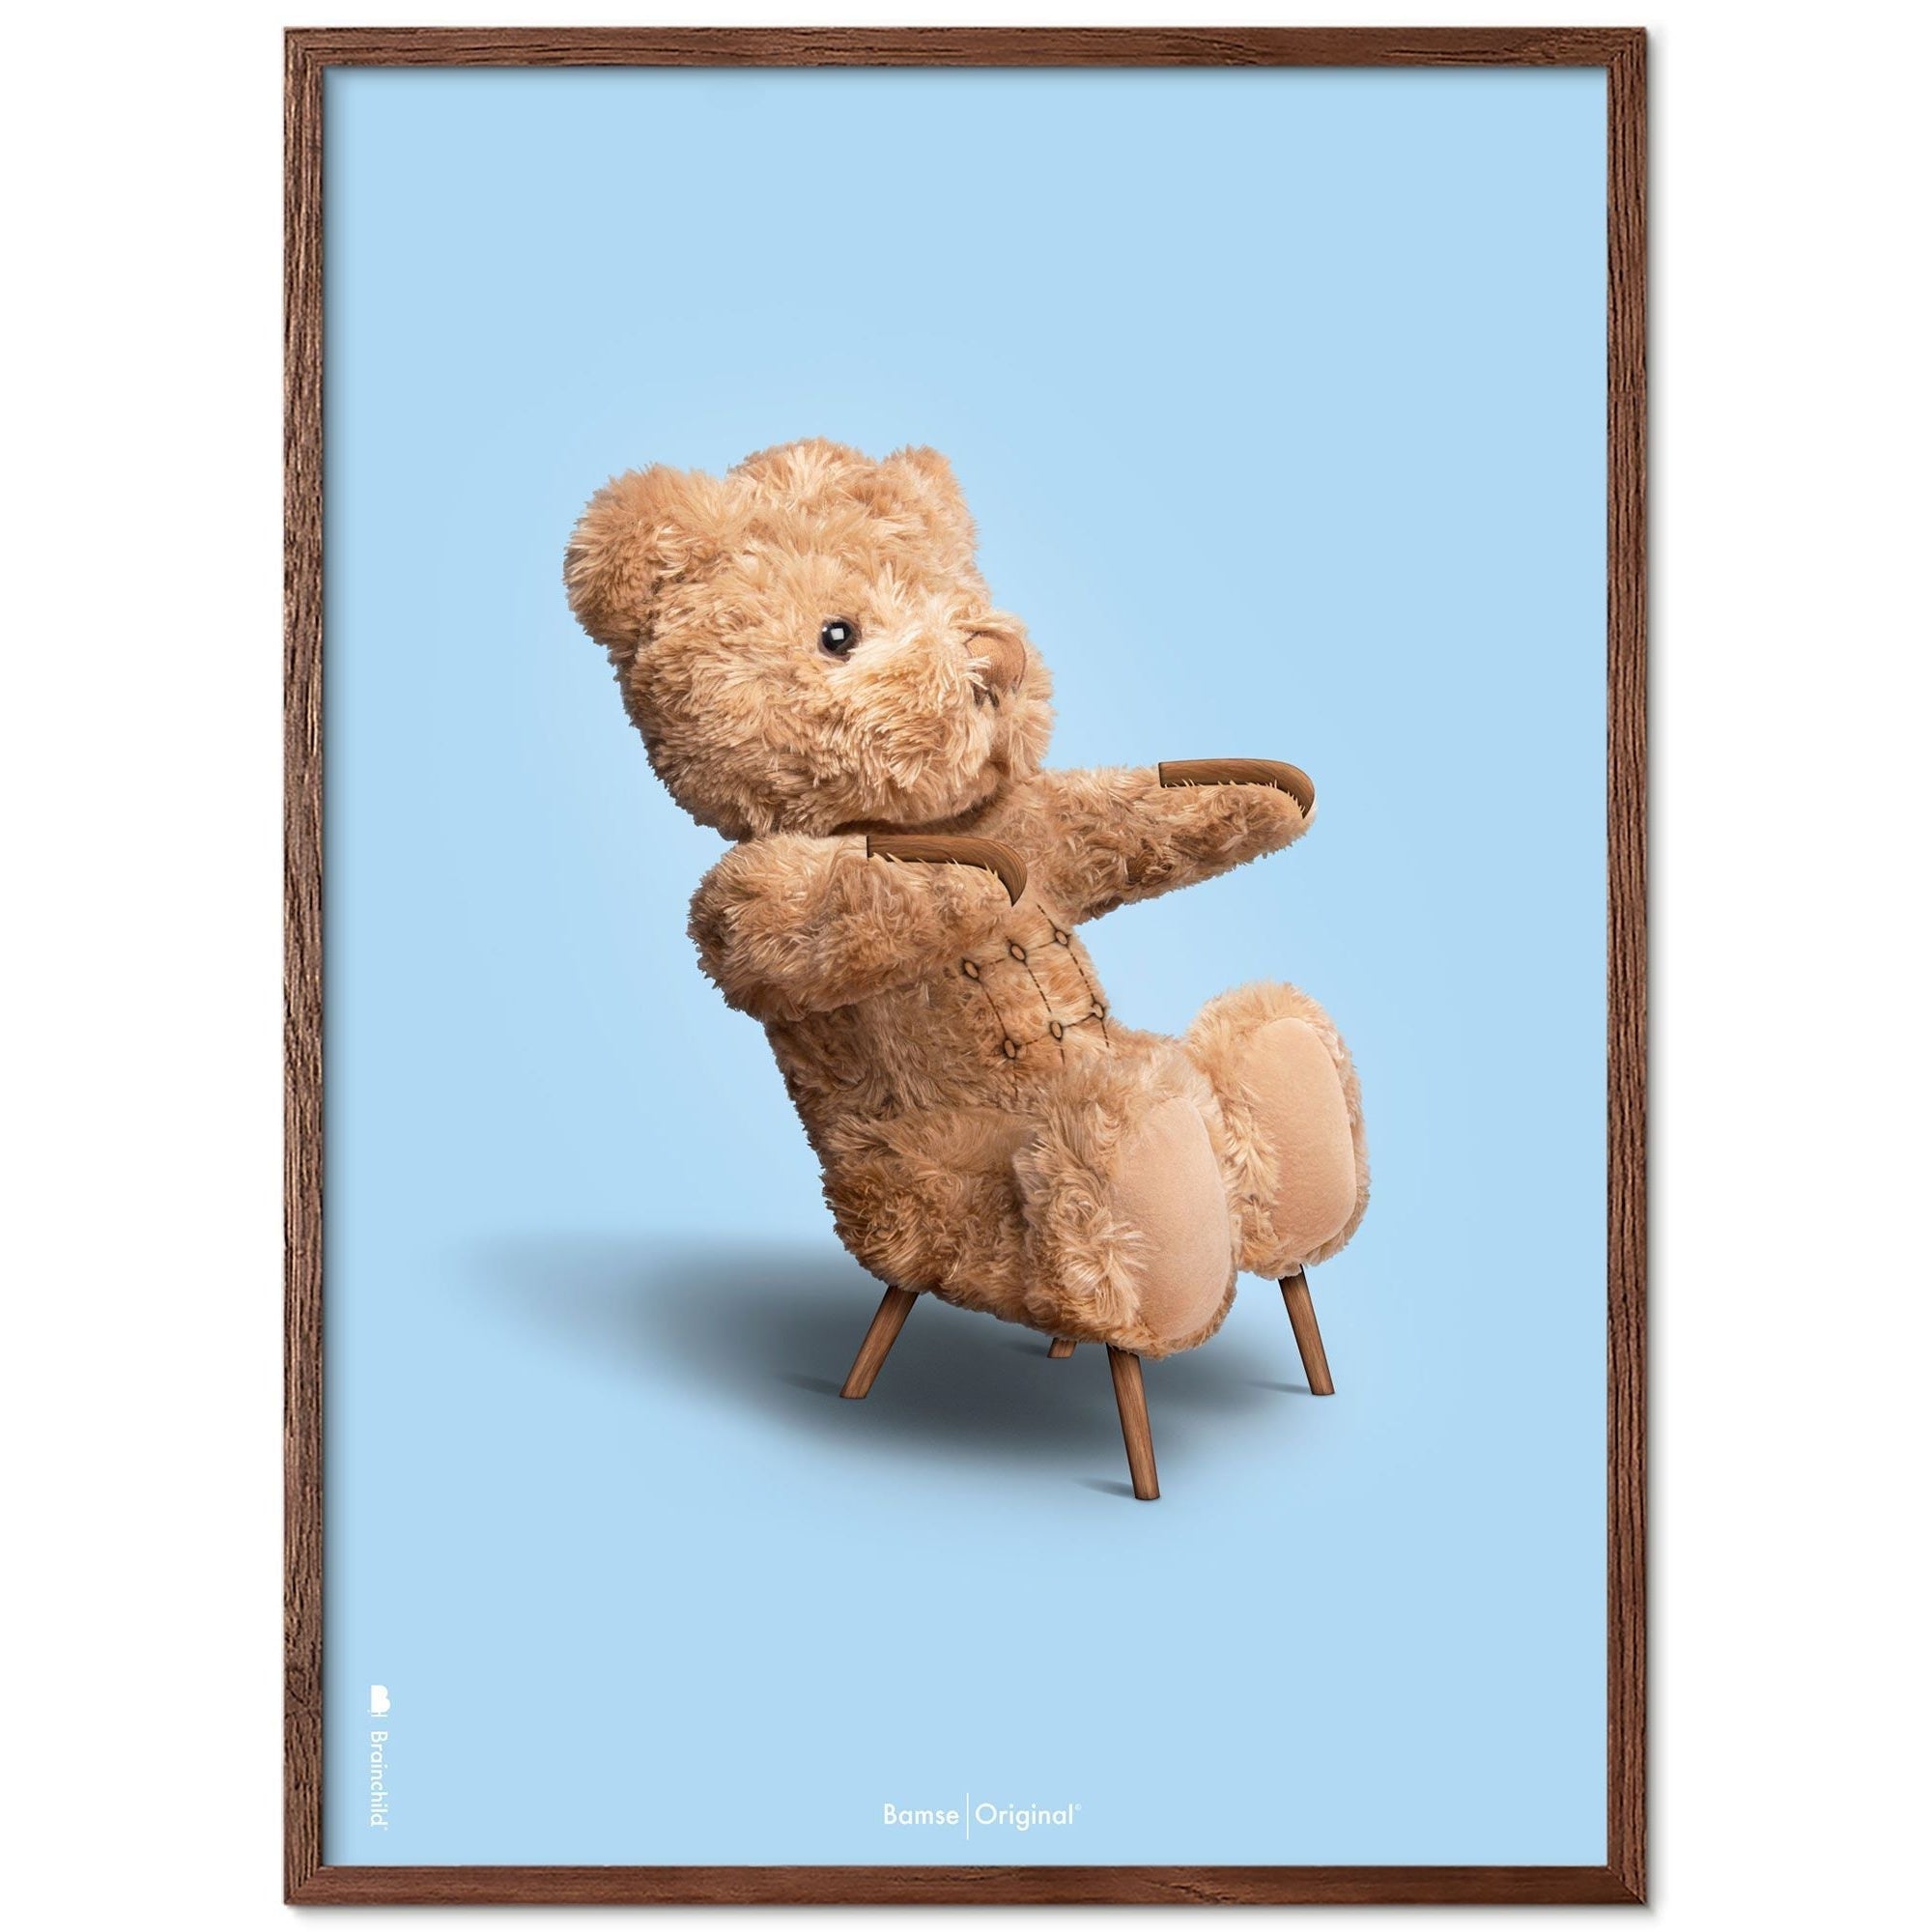 Brainchild Teddybeer klassiek poster frame gemaakt van donker hout ram 30x40 cm, lichtblauwe achtergrond